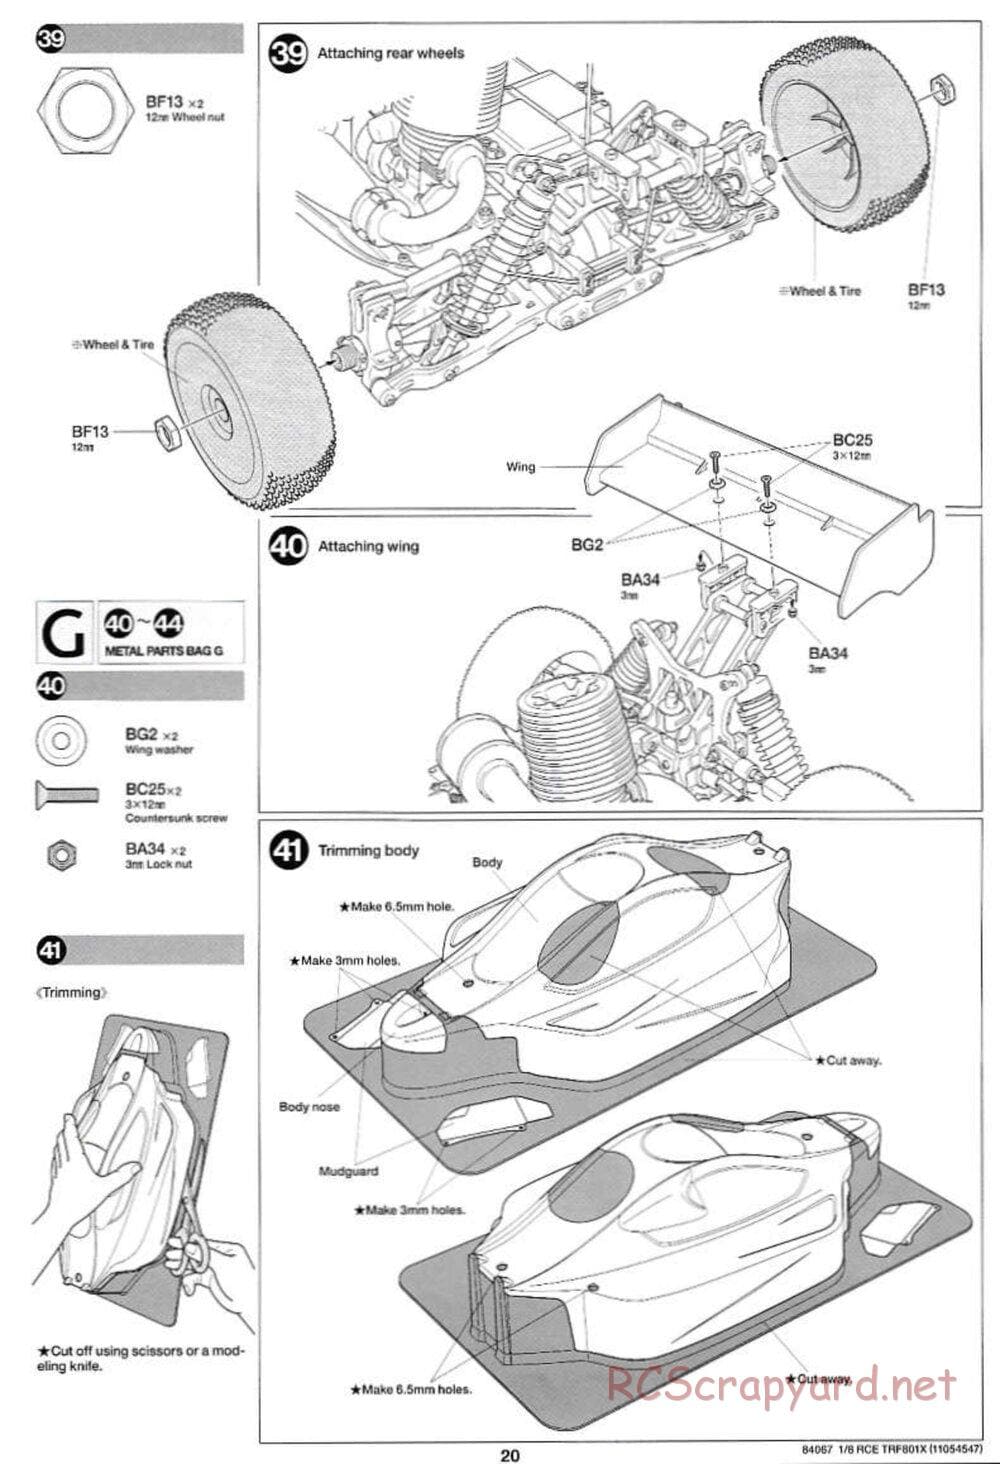 Tamiya - TRF801X Chassis - Manual - Page 20